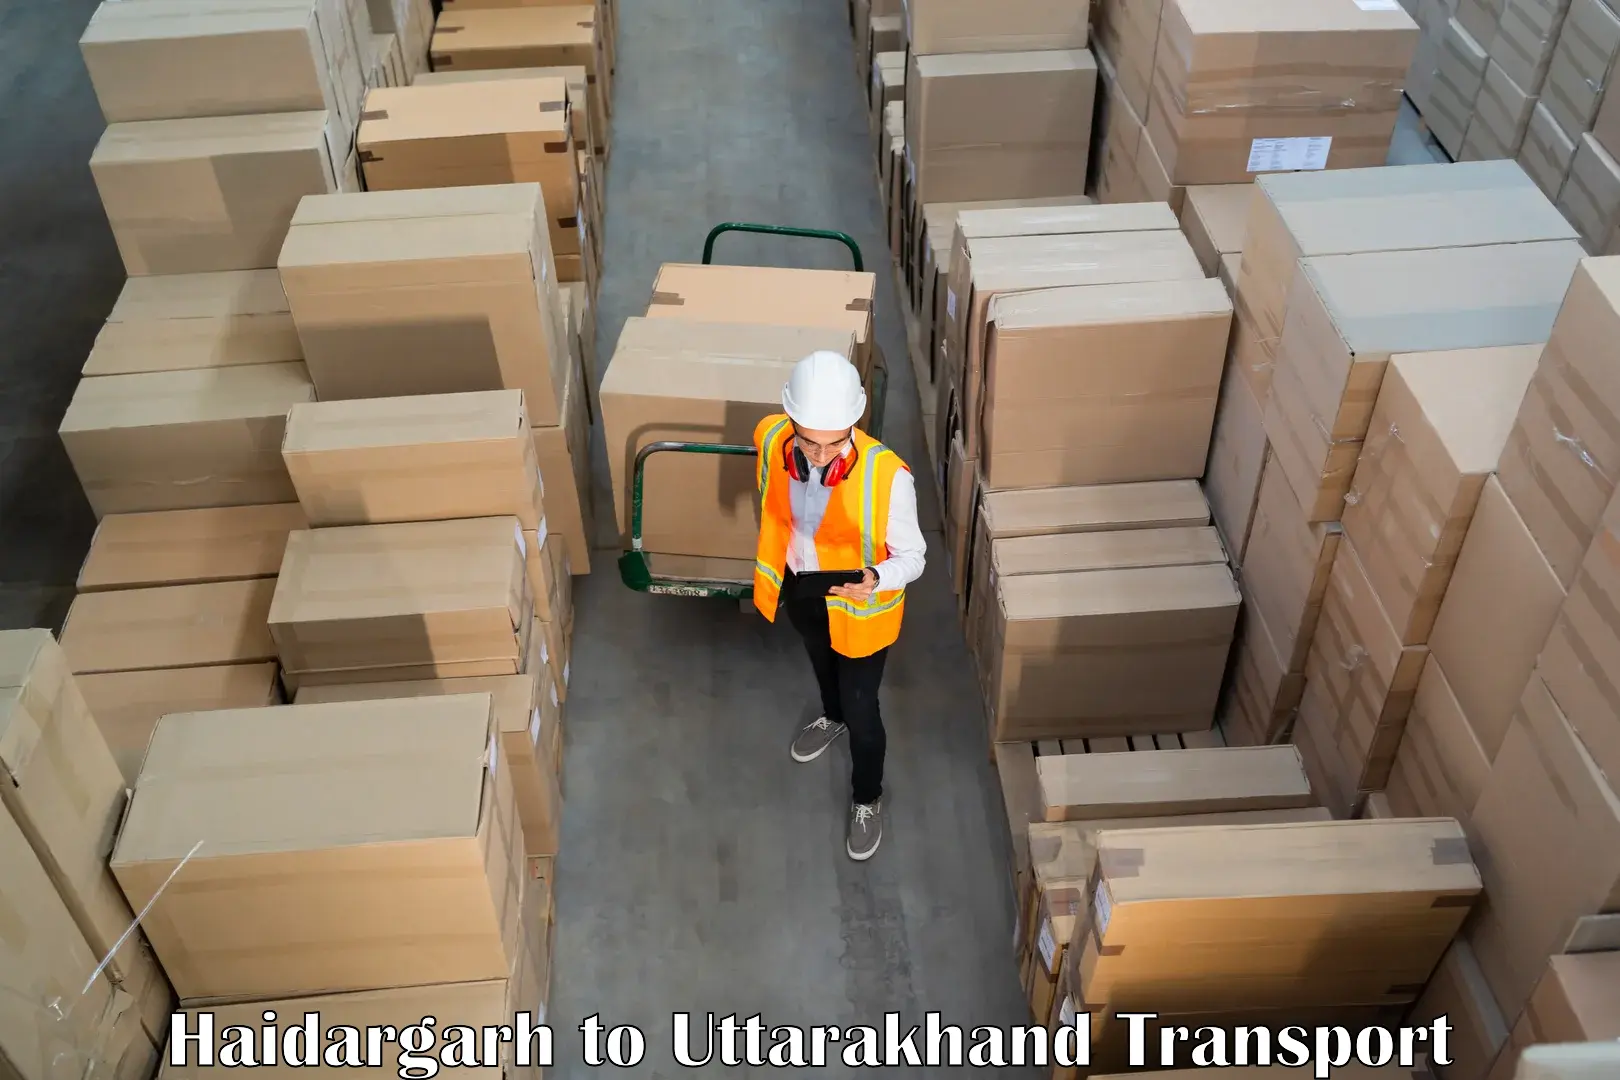 Delivery service Haidargarh to Uttarkashi